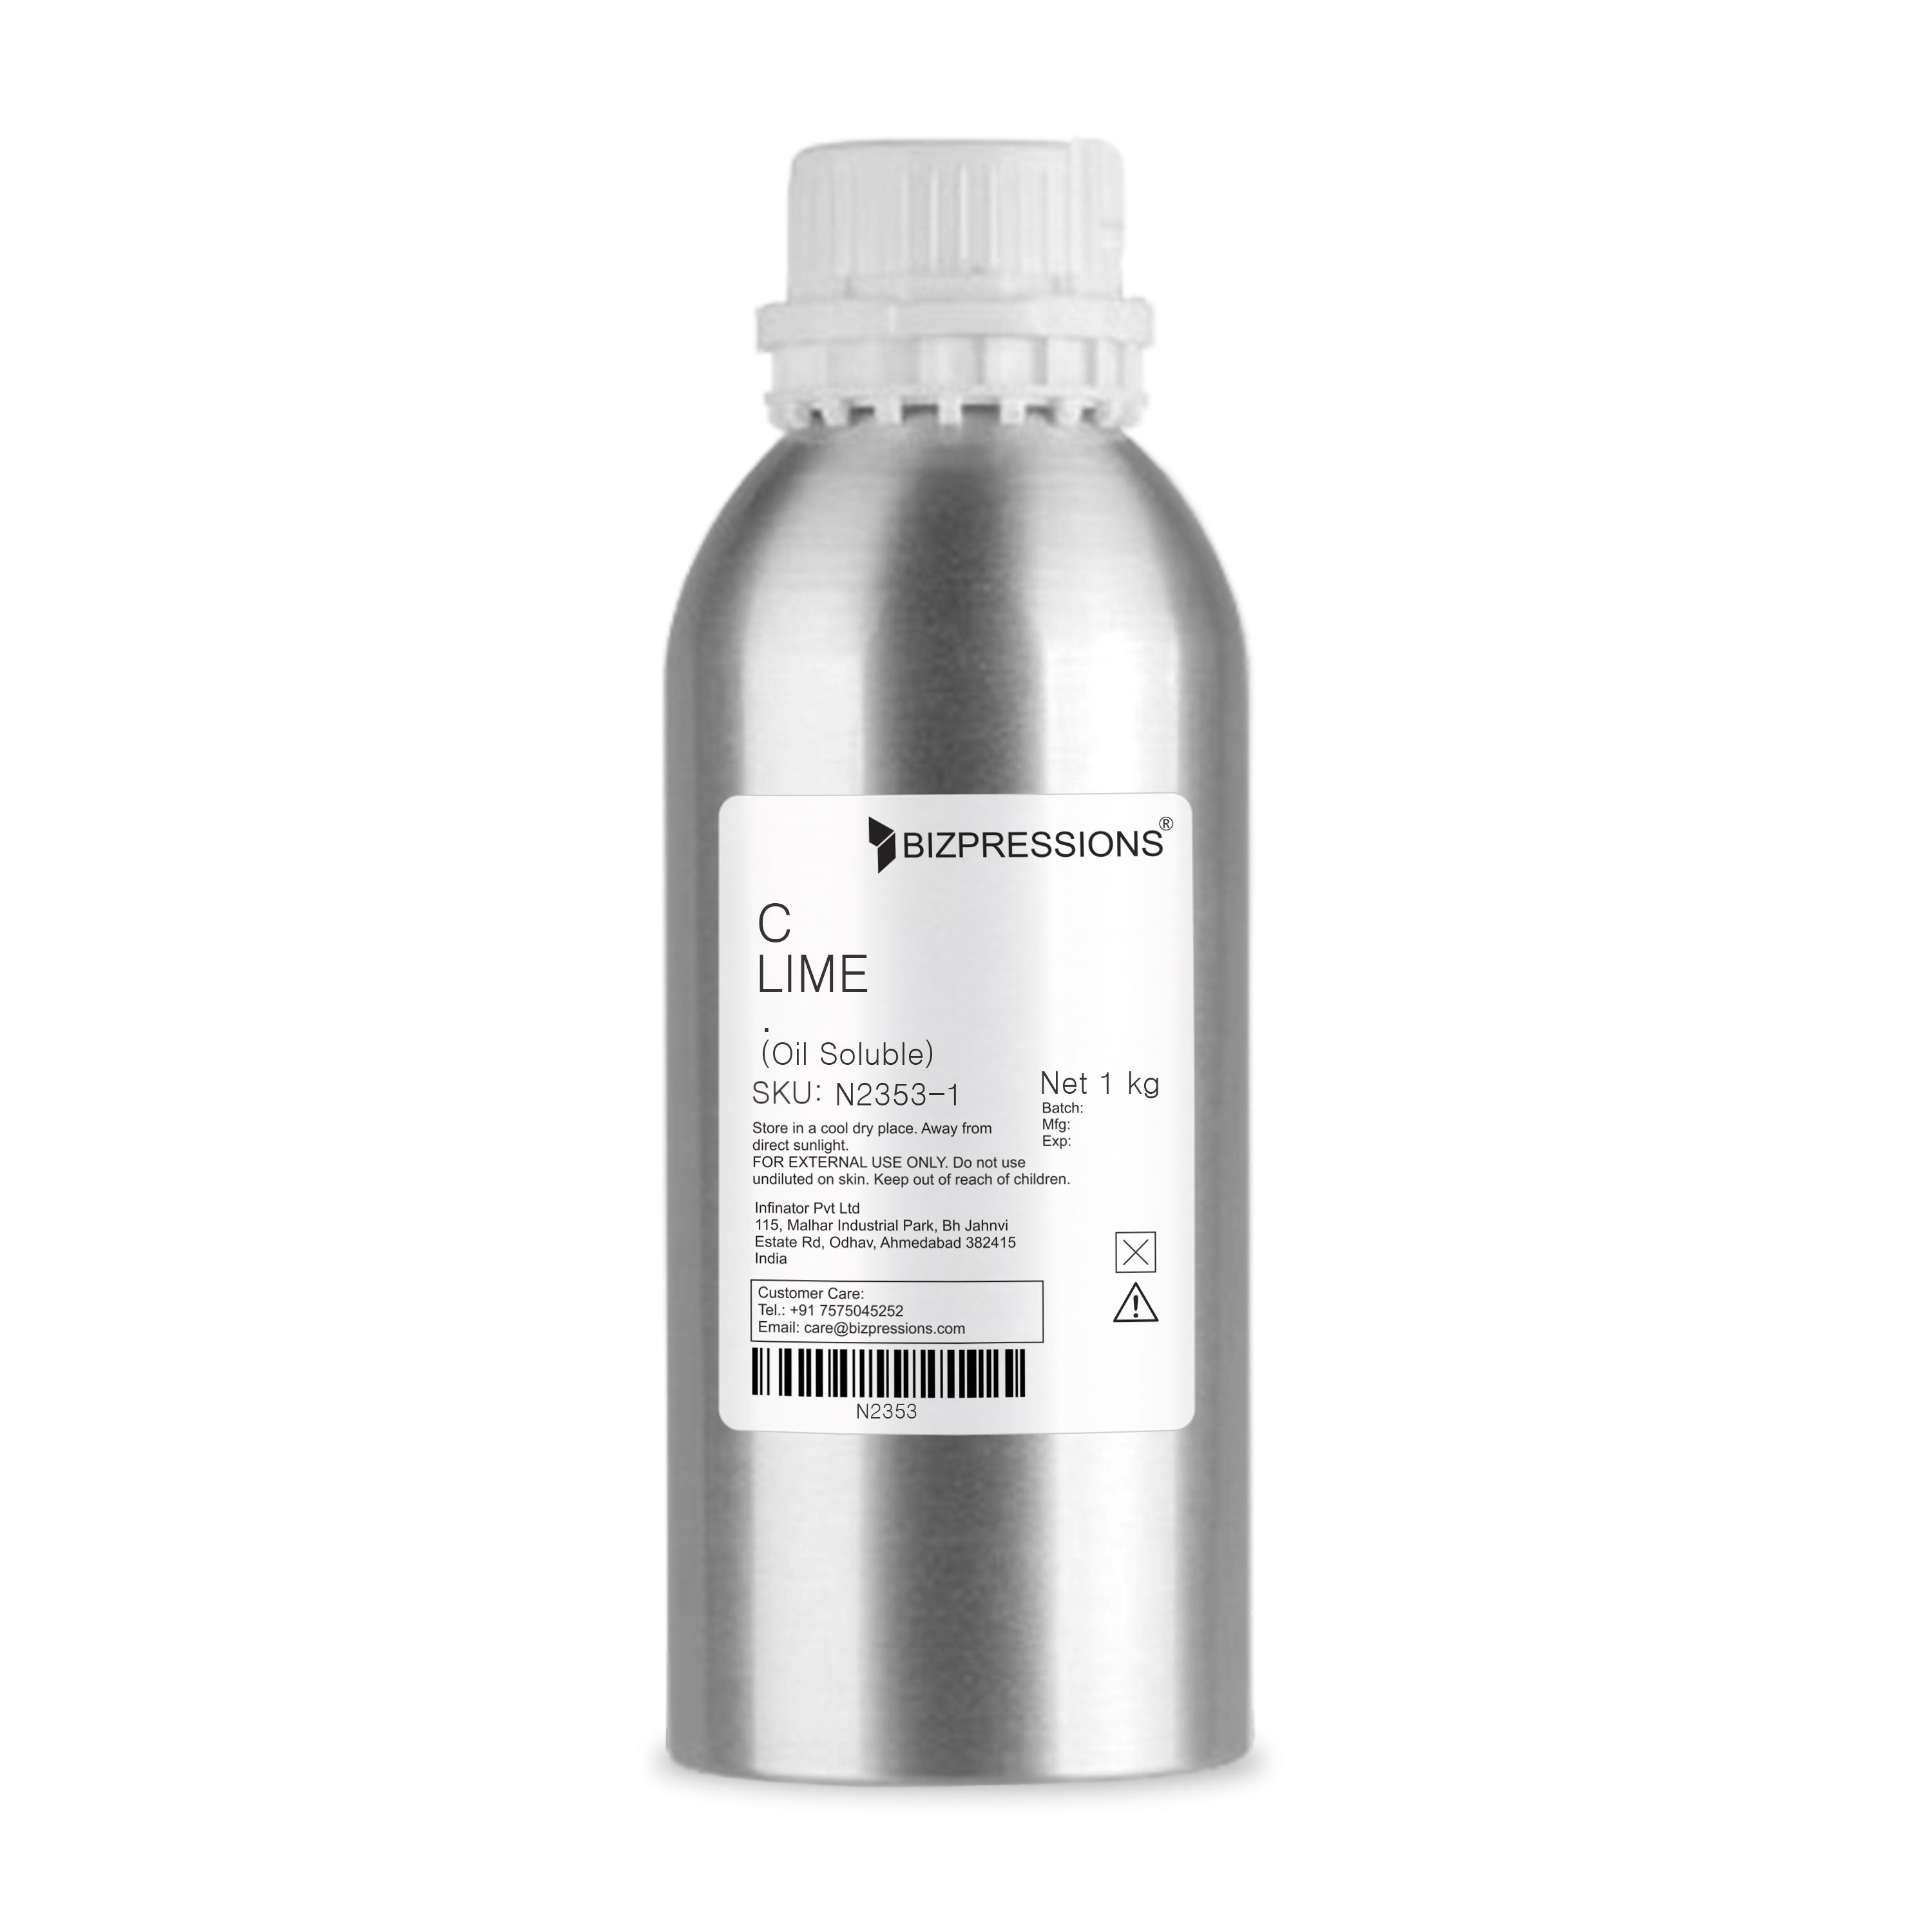 C LIME - Fragrance (Oil Soluble)